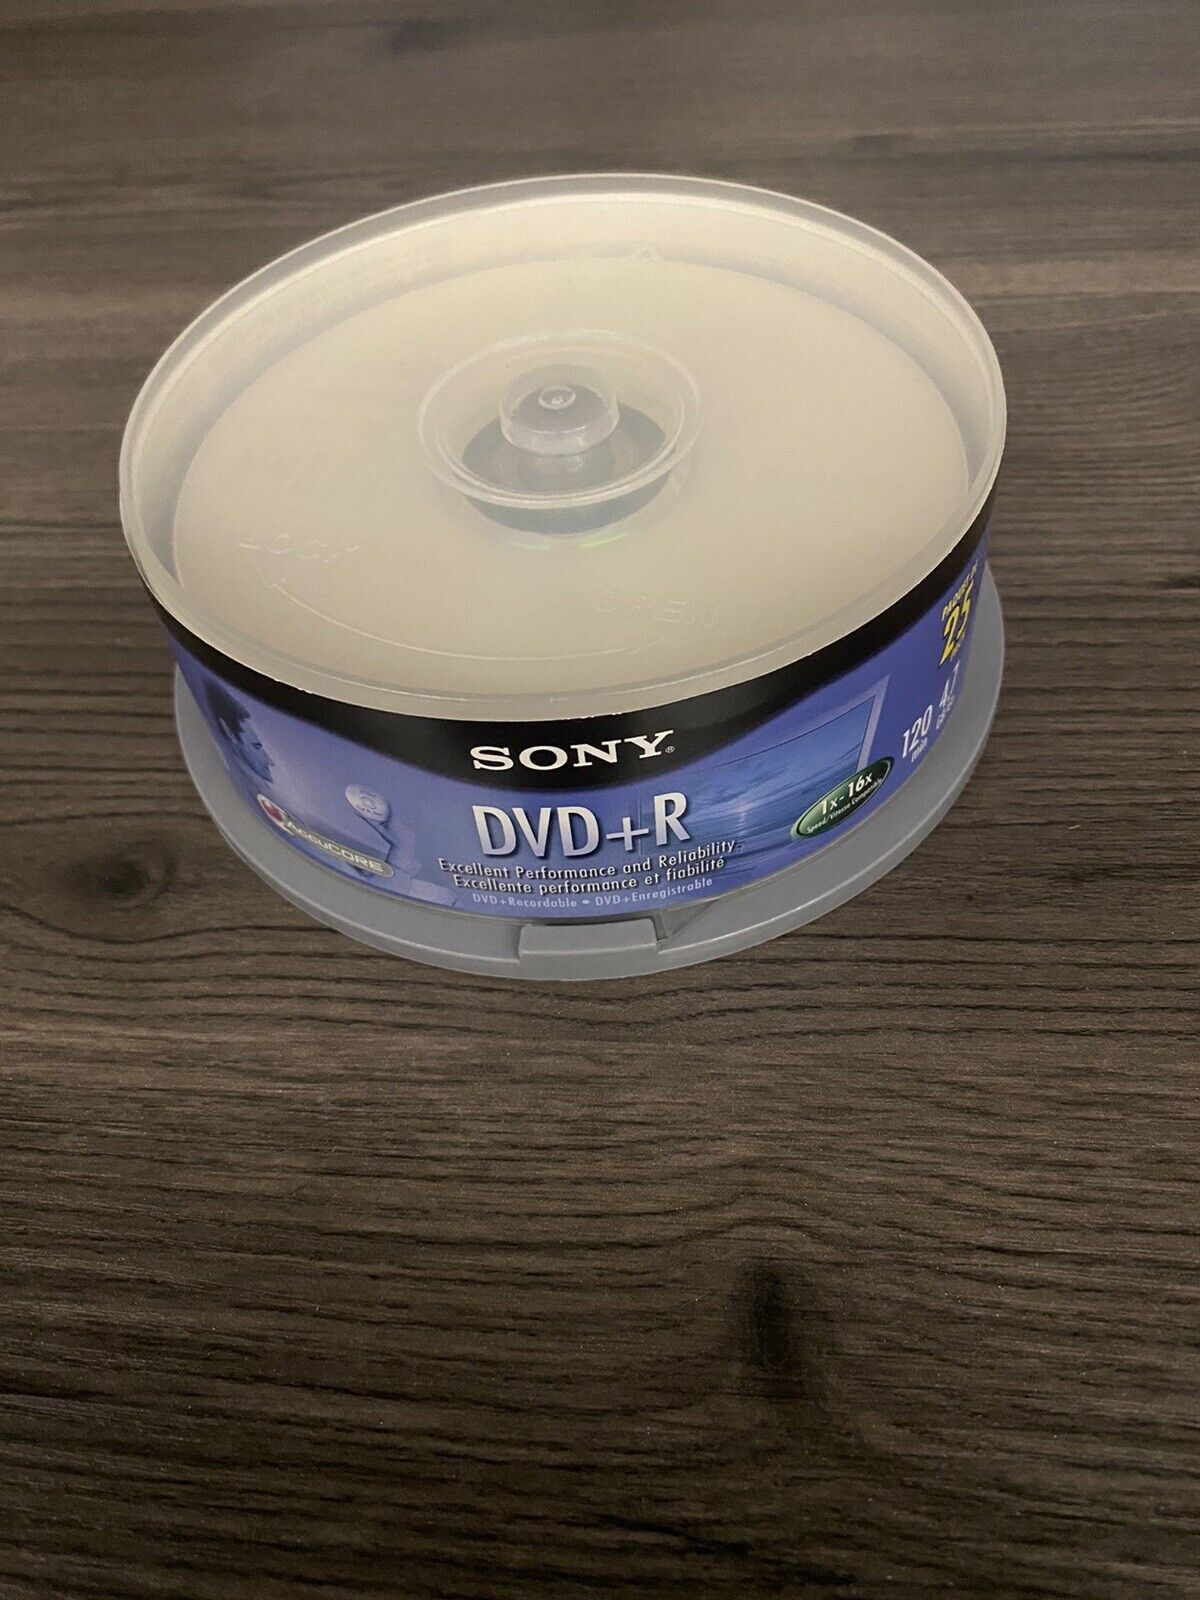 SONY DVD+R  8X / 4.7GB / 120 Min - 22 Left In Pack